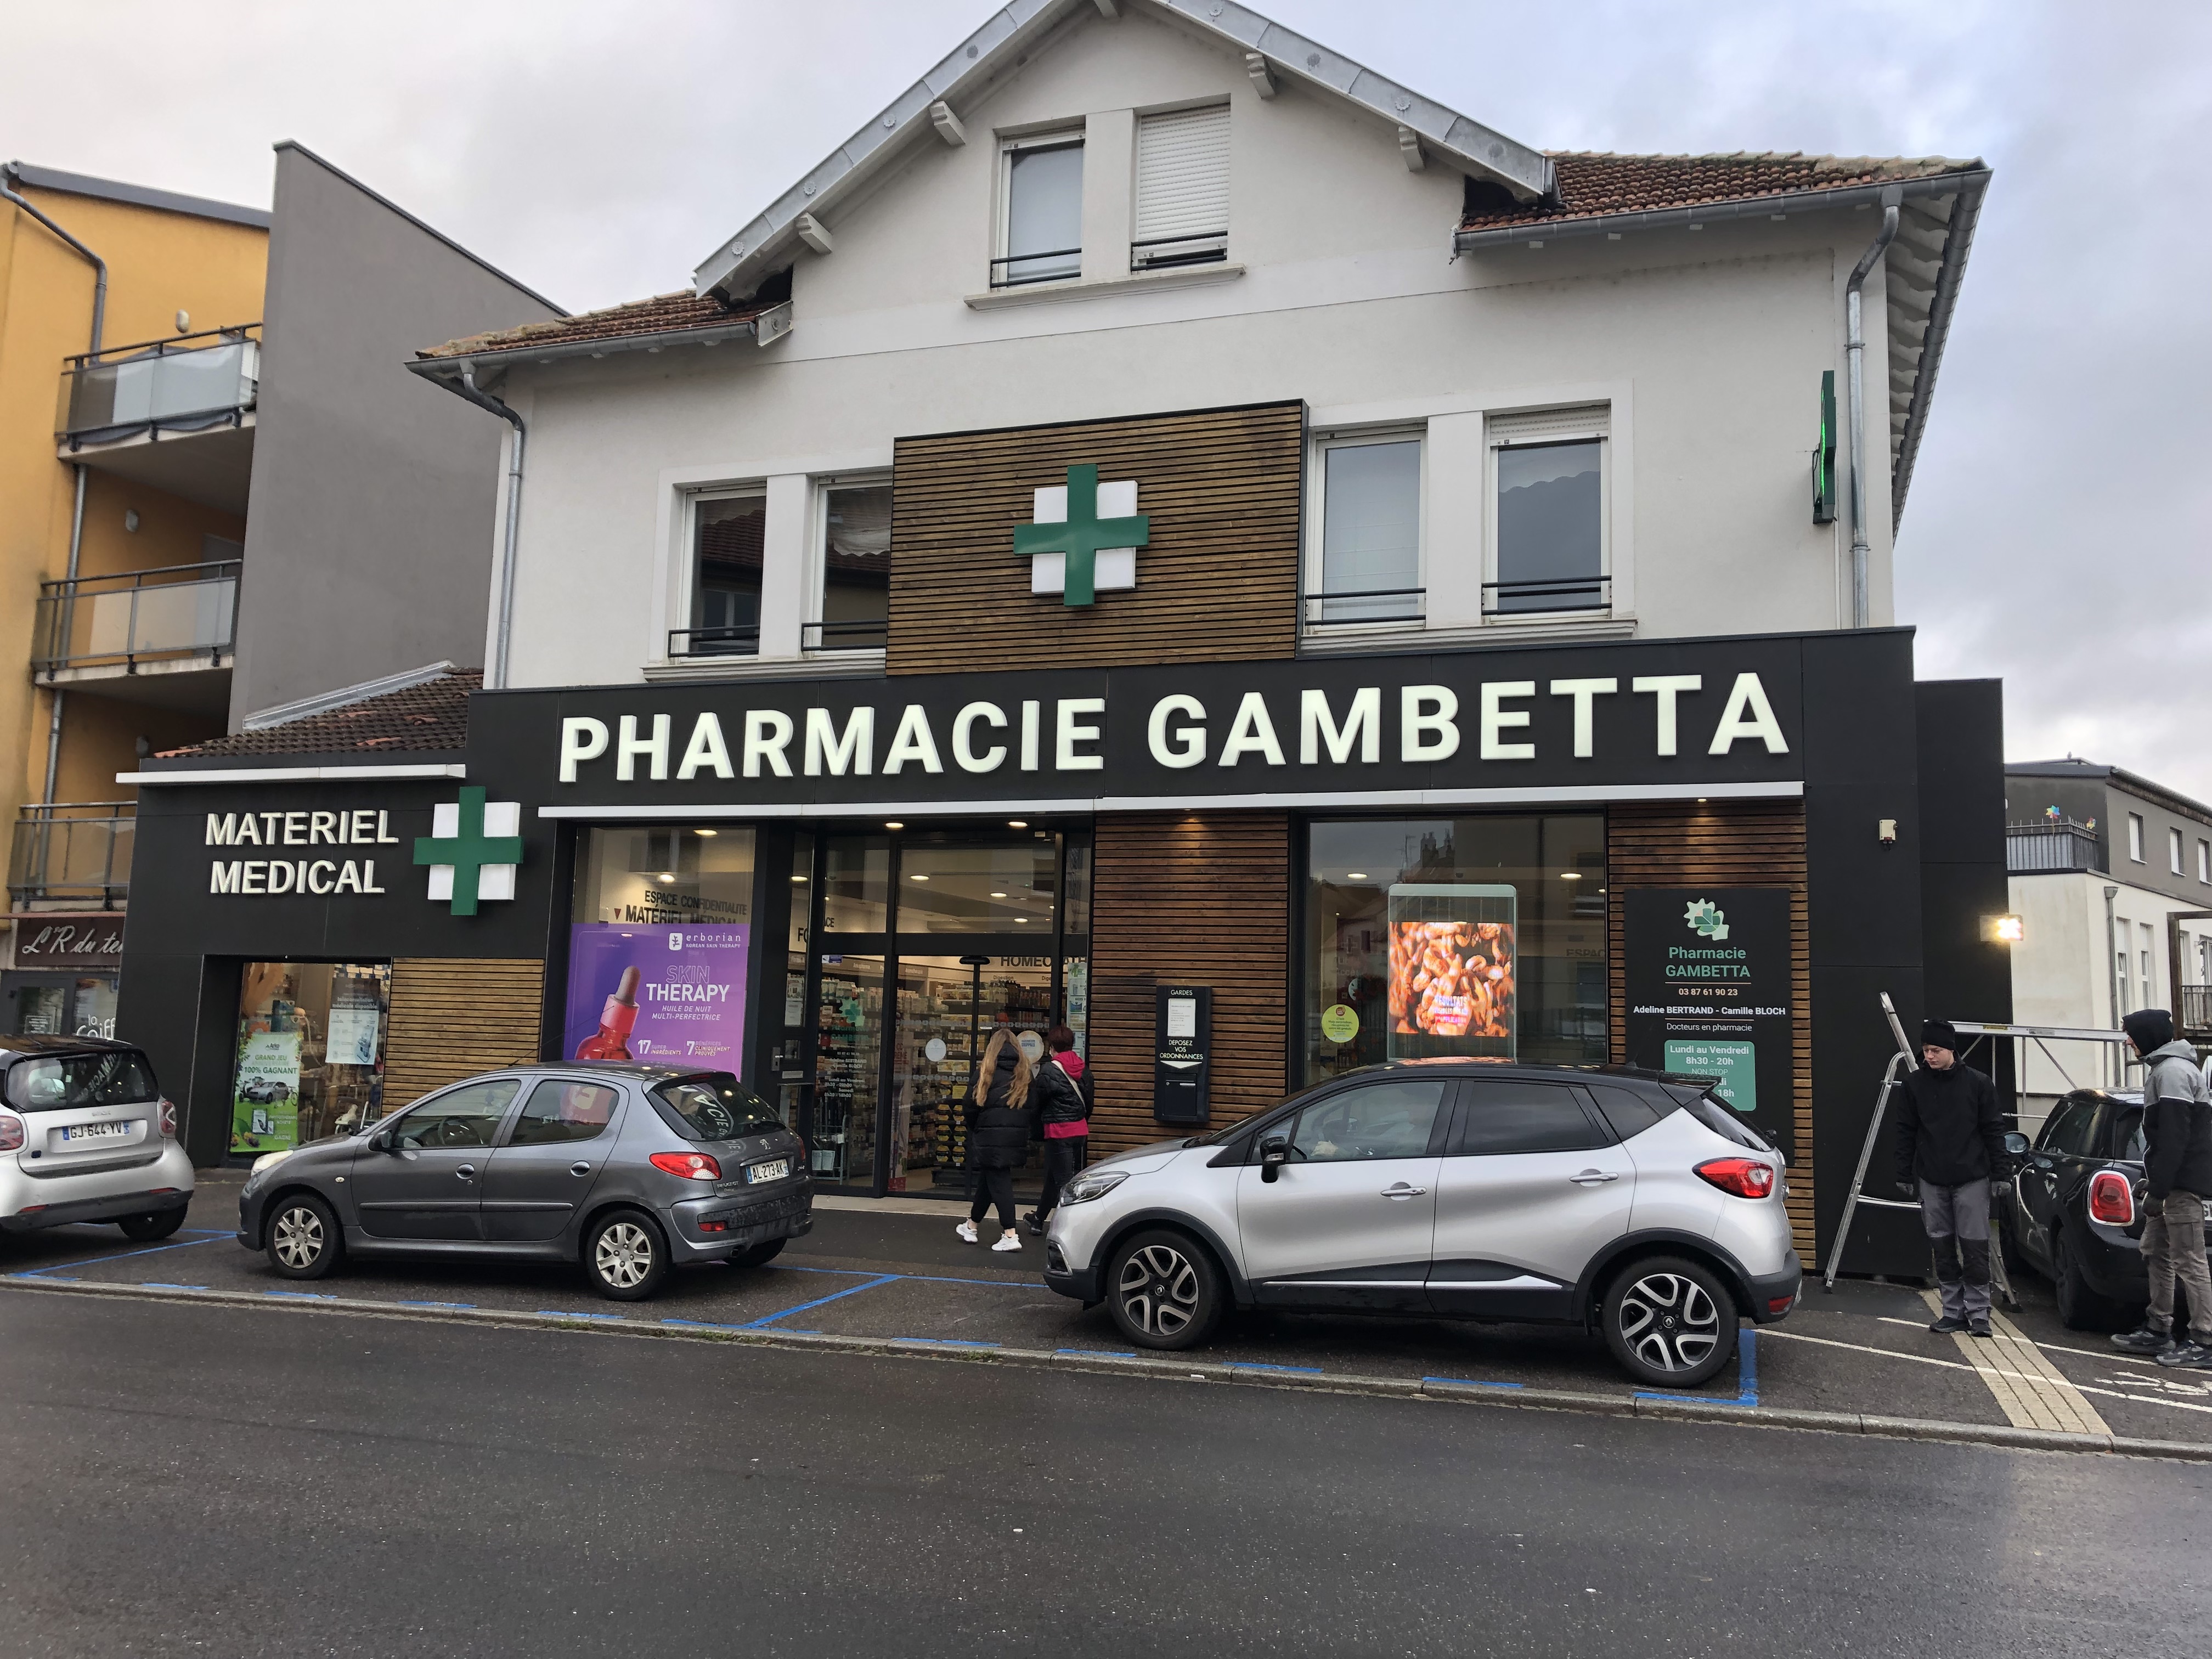 Pharmacie-gambetta-enseigne-lumière-lynxmedia (1).jpg